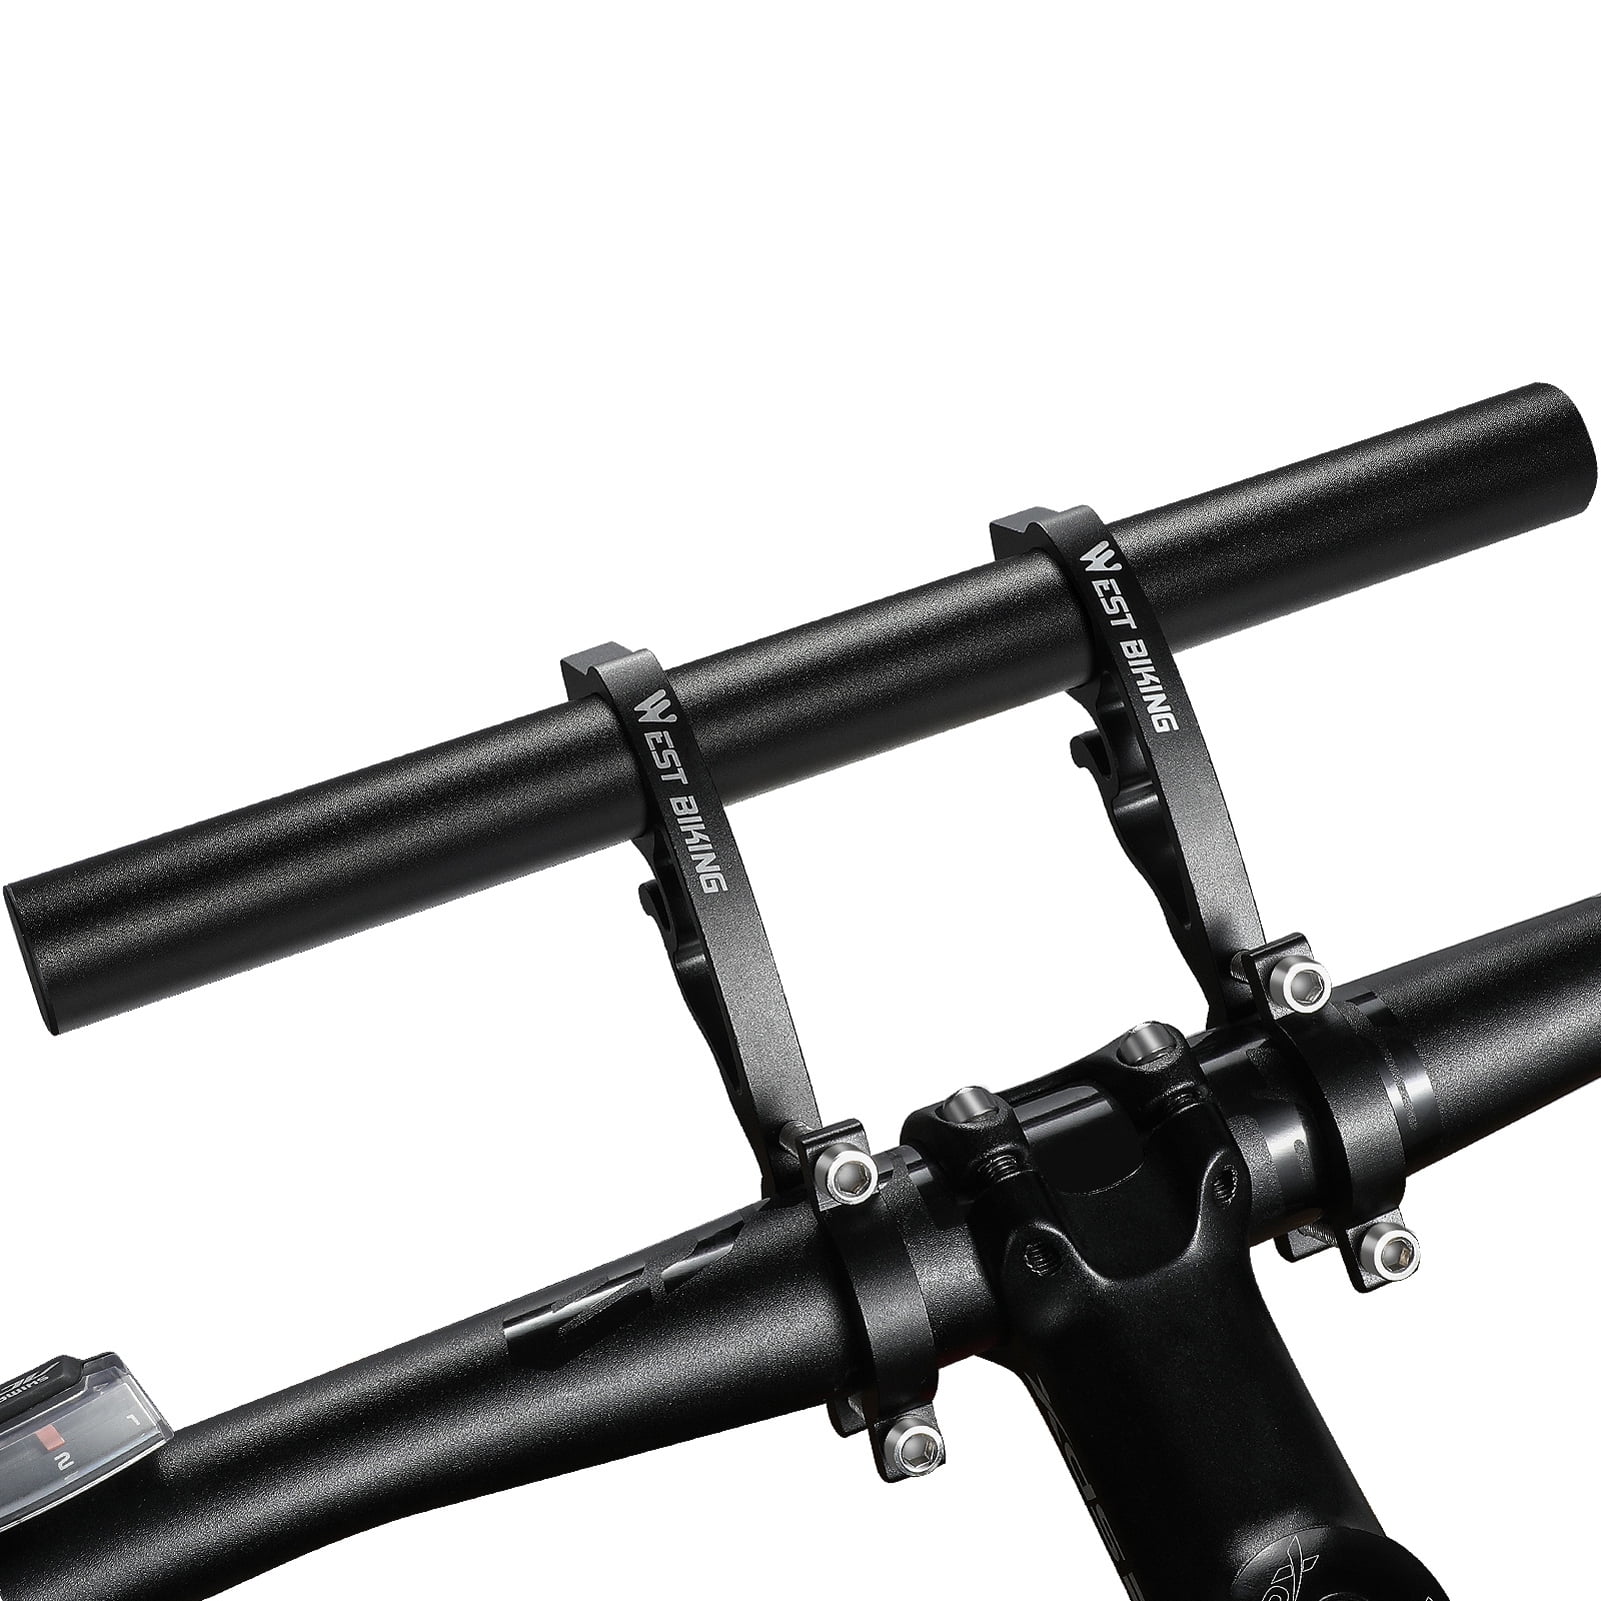 WASAGA Double Clamp Carbon Fiber Super Long Bike Bicycle Handlebar Extender Extension 